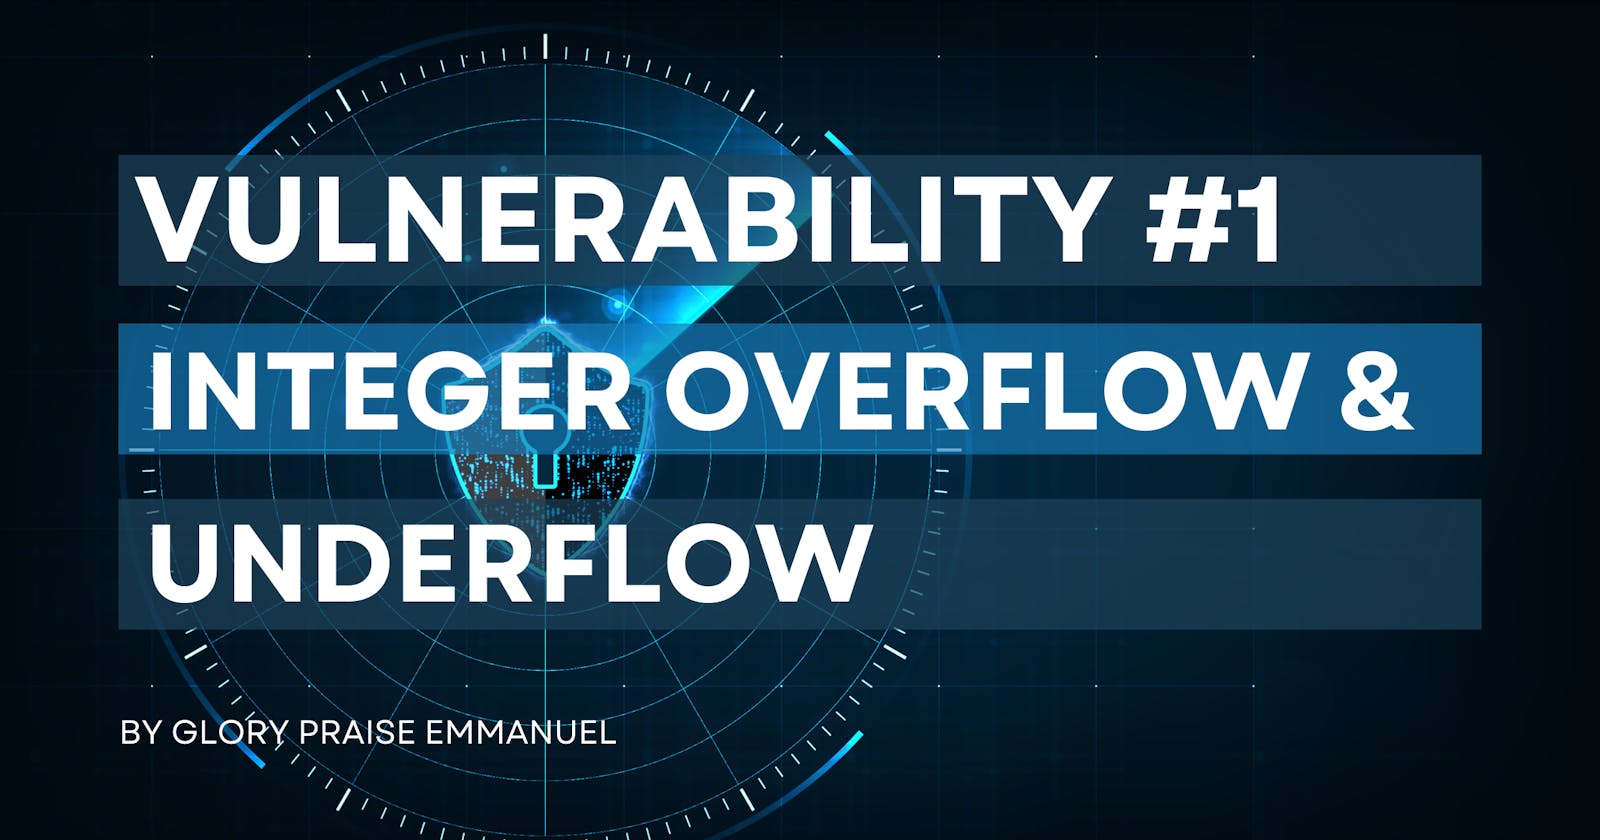 Vulnerability #1 - Integer Overflow/Underflow in Solidity